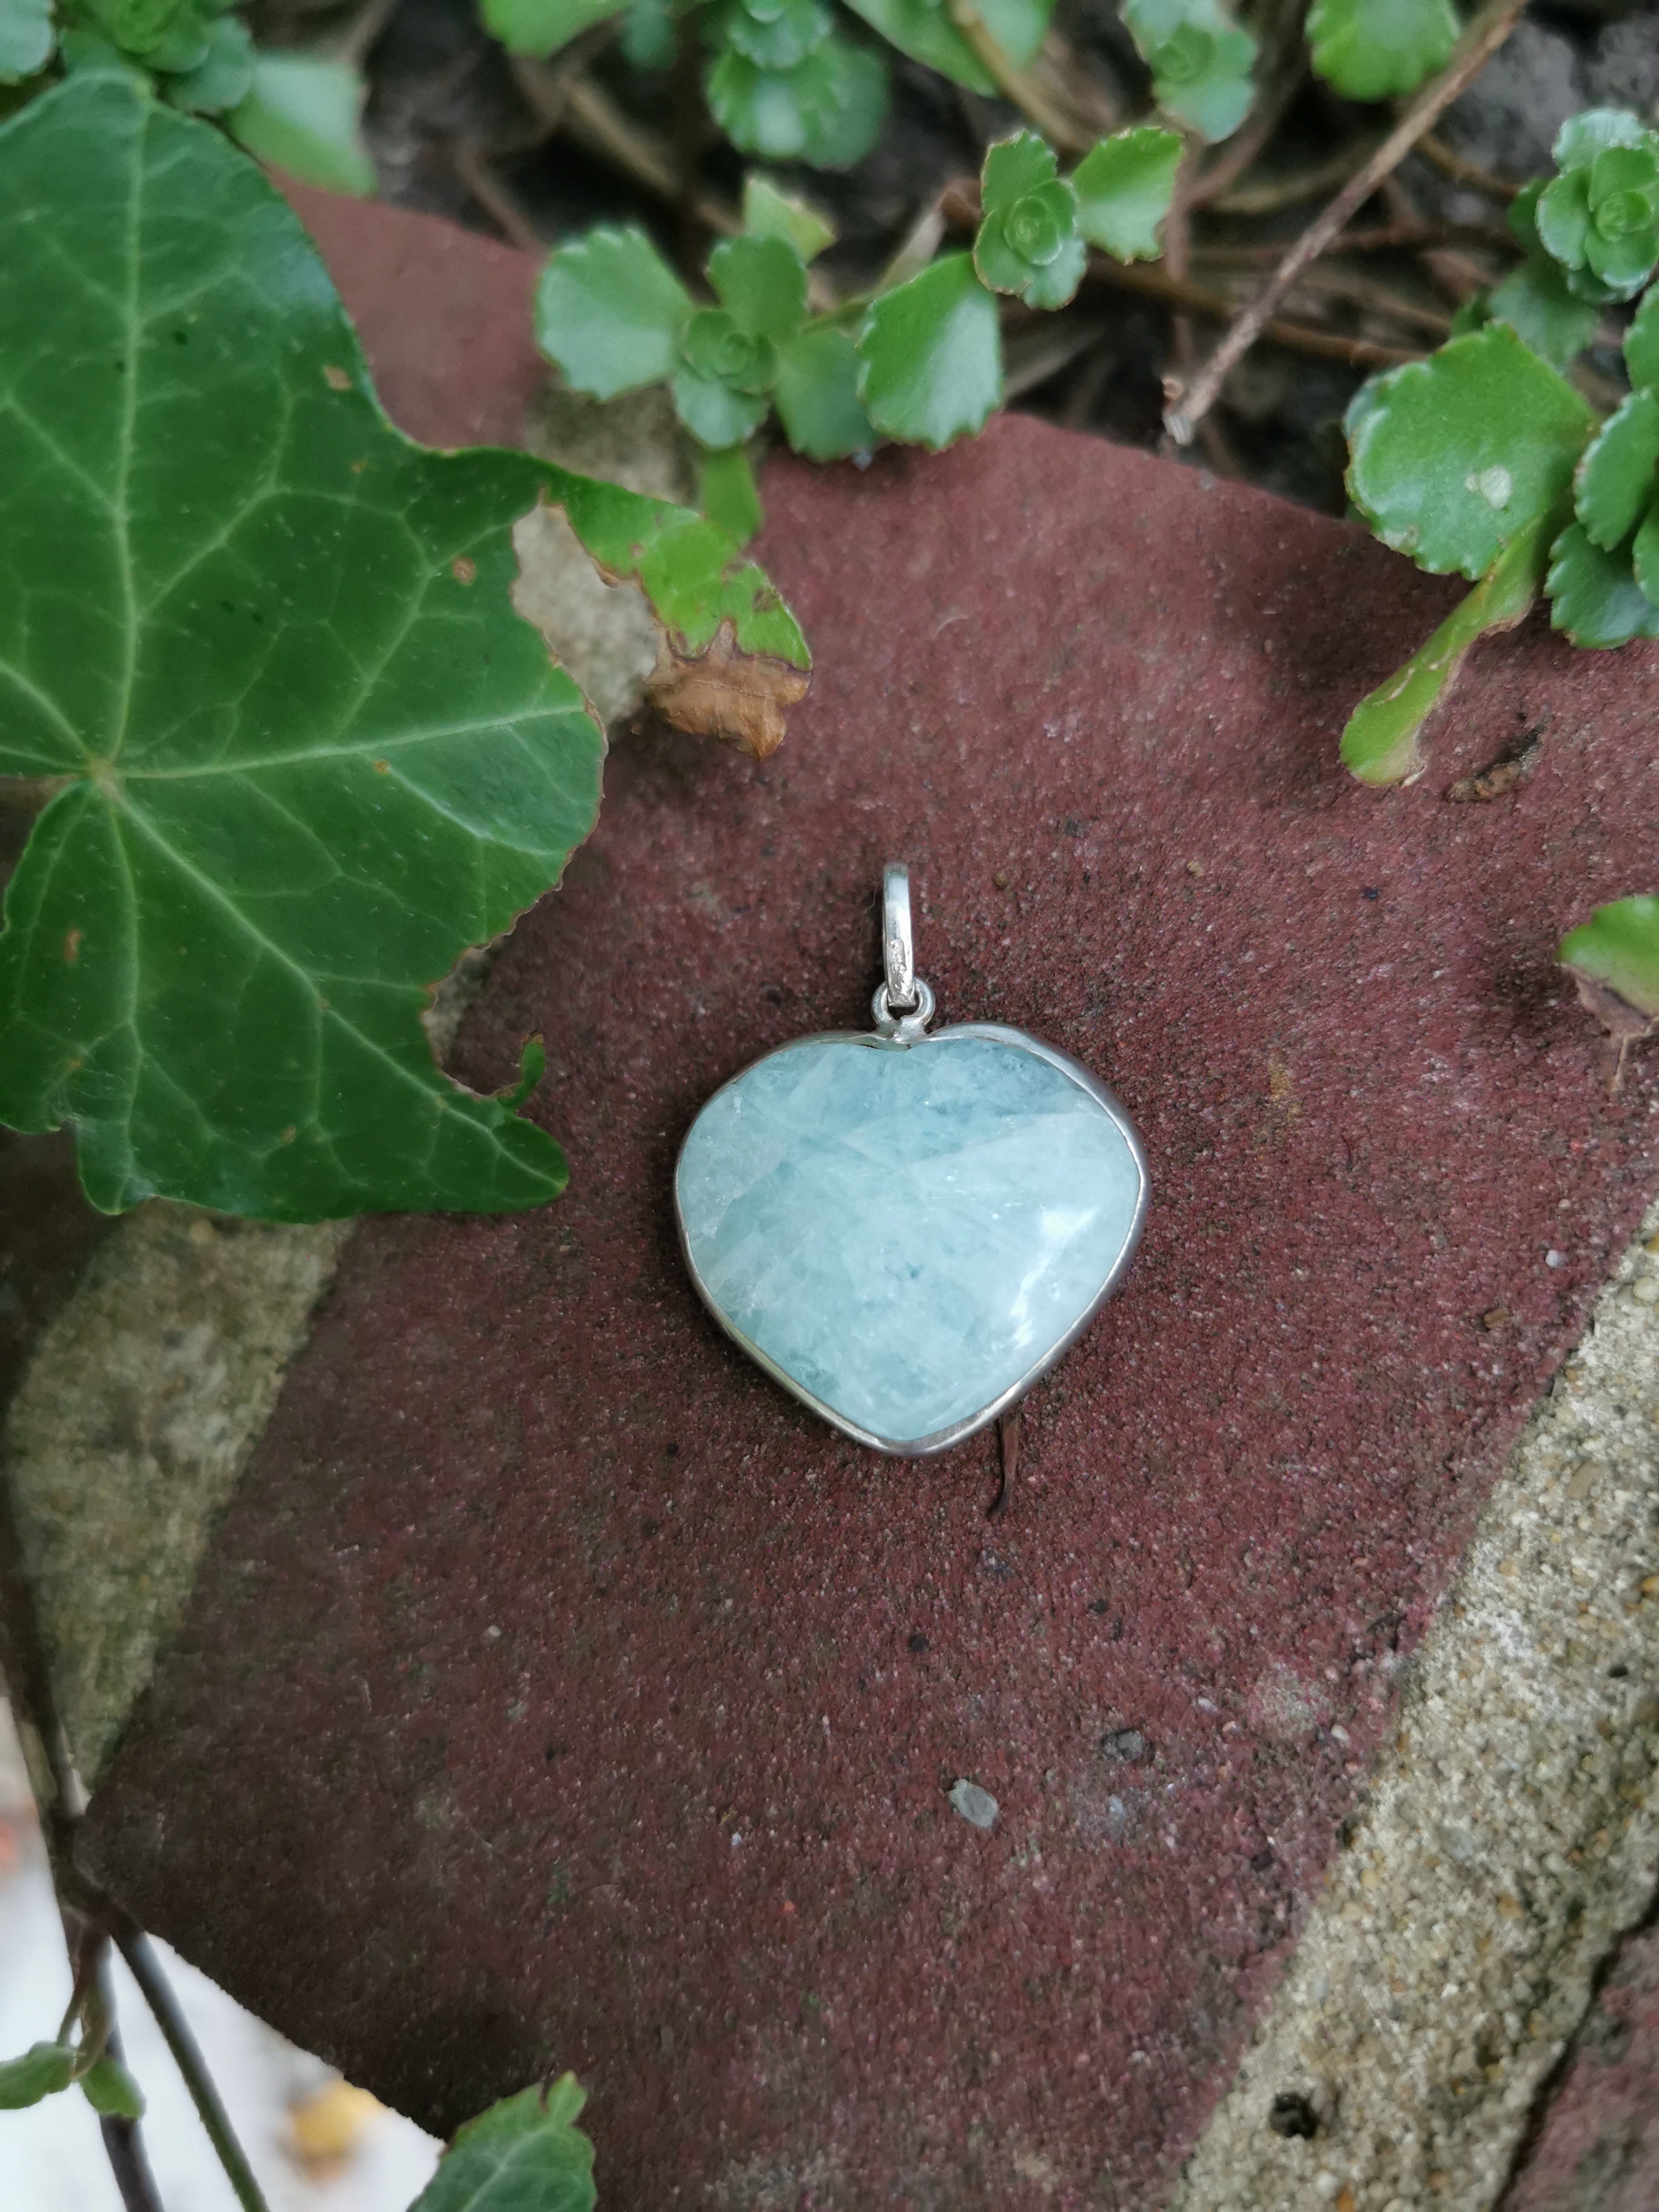 Aquamarine Heart Pendant - 925 Sterling Silver